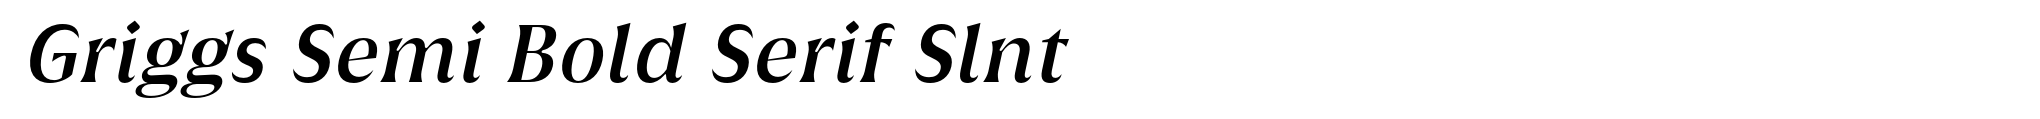 Griggs Semi Bold Serif Slnt image